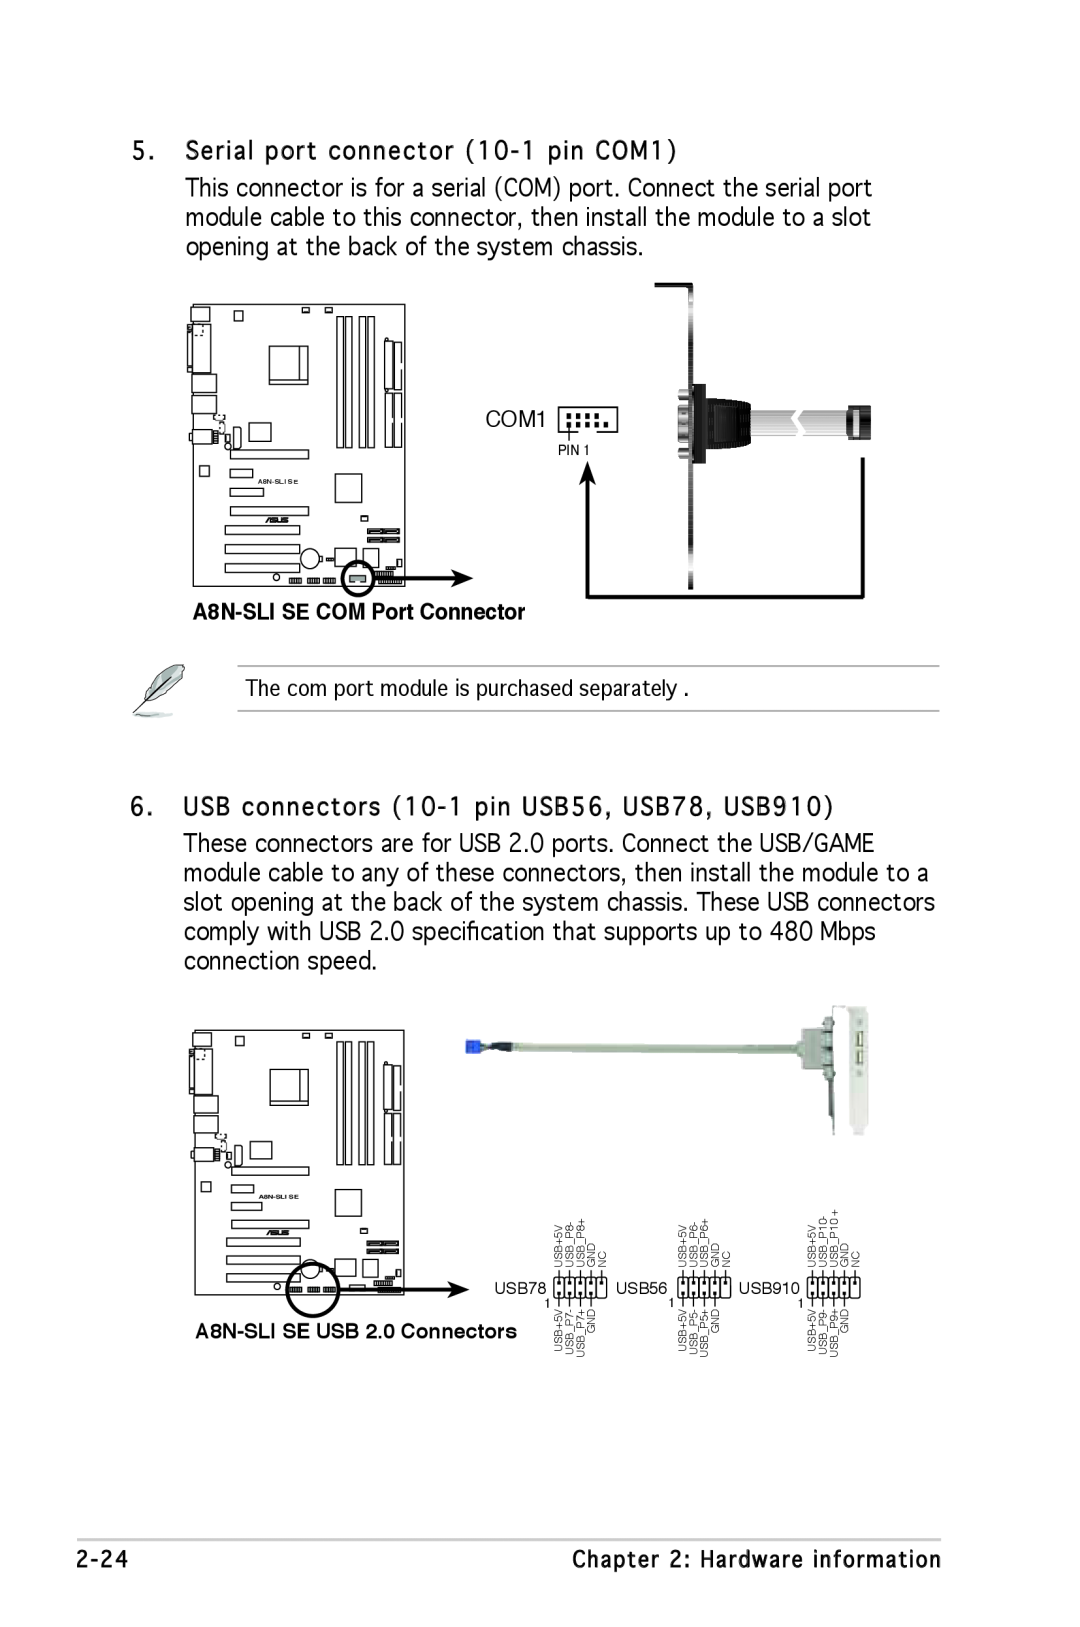 Asus A8N-SLI SE manual Serial port connector 10-1 pin COM1 